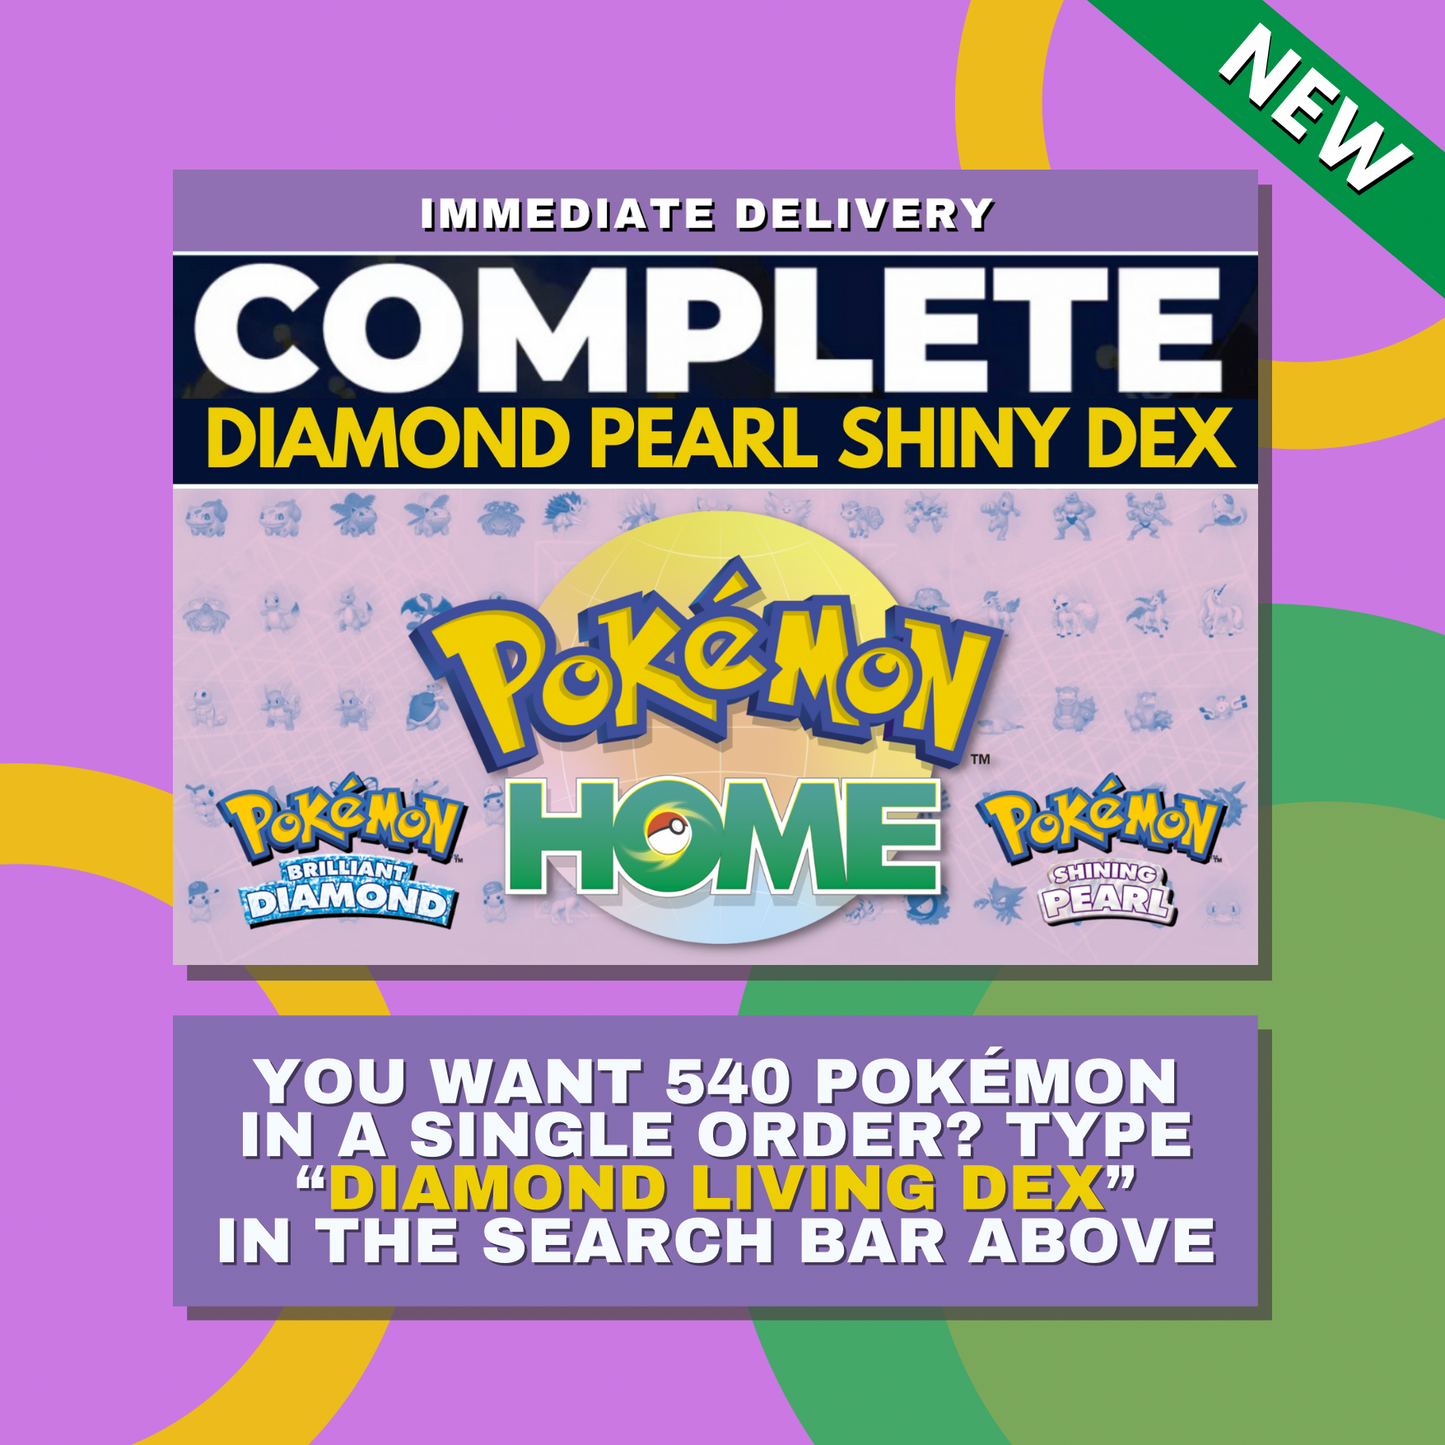 Magnezone Shiny ✨ or Non Shiny Pokémon Brilliant Diamond Shining Pearl Battle Ready 6 IV Competitive 100% Legit Level 100 Customizable Custom OT by Shiny Living Dex | Shiny Living Dex